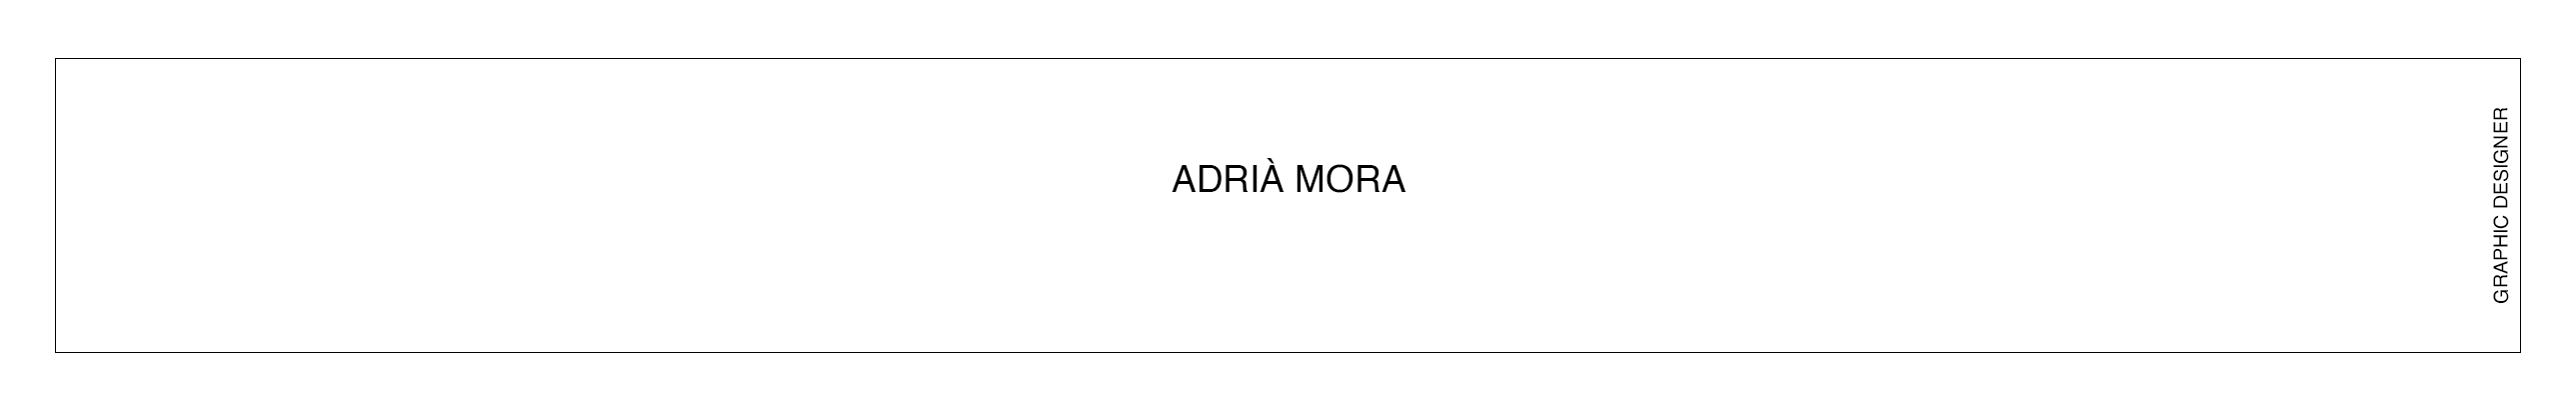 Adrià Moras profilbanner